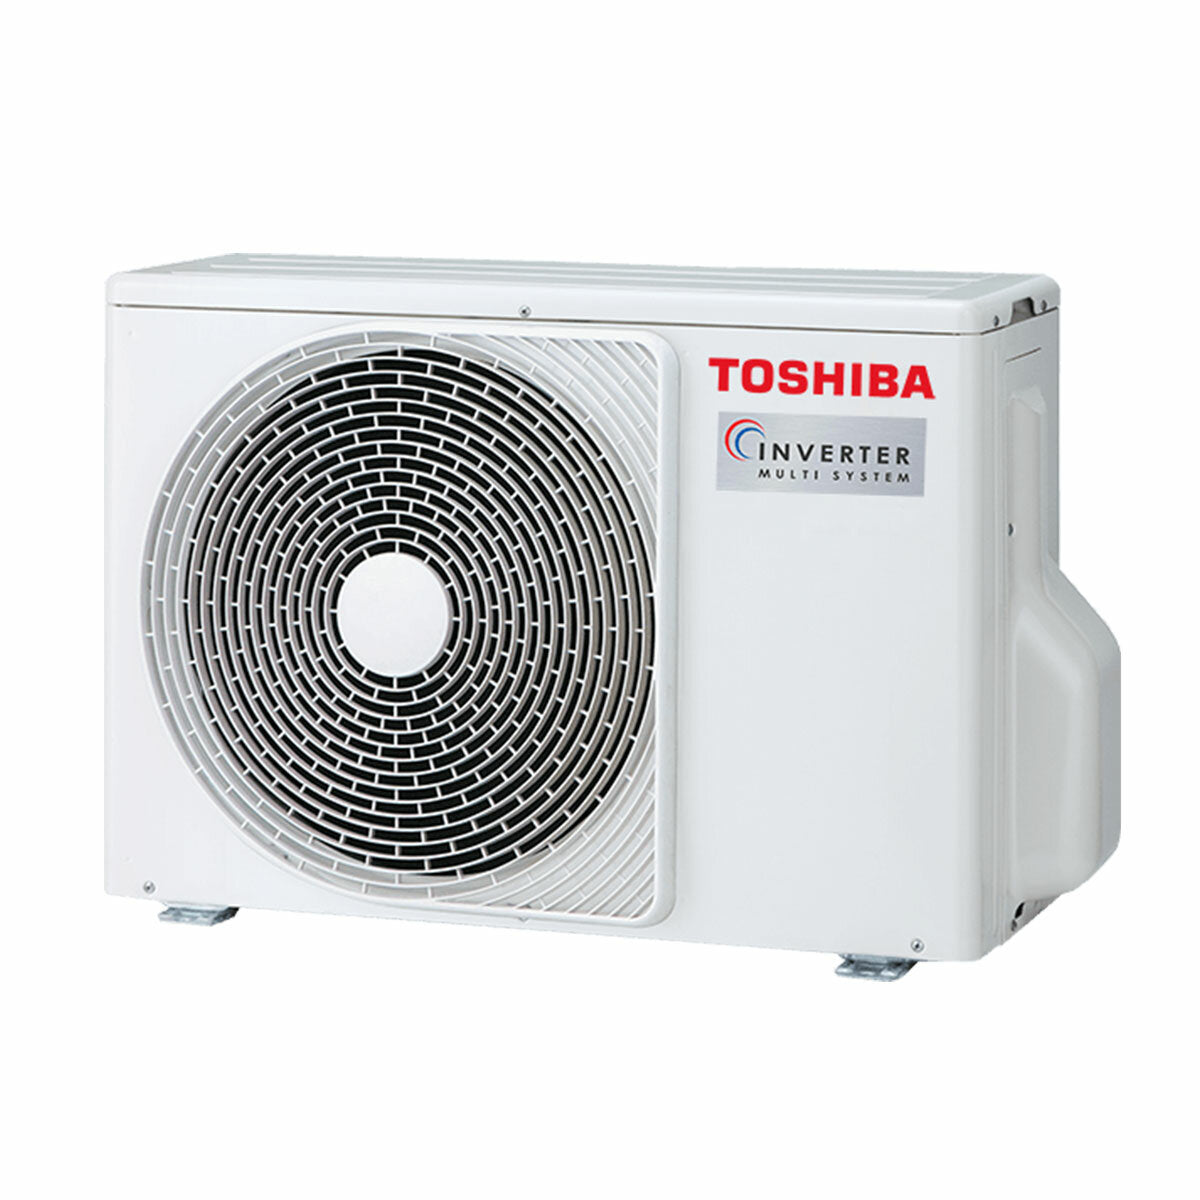 Toshiba Console J2 trial split air conditioner 9000+9000+12000 BTU inverter A+++ external unit 5.2 kW